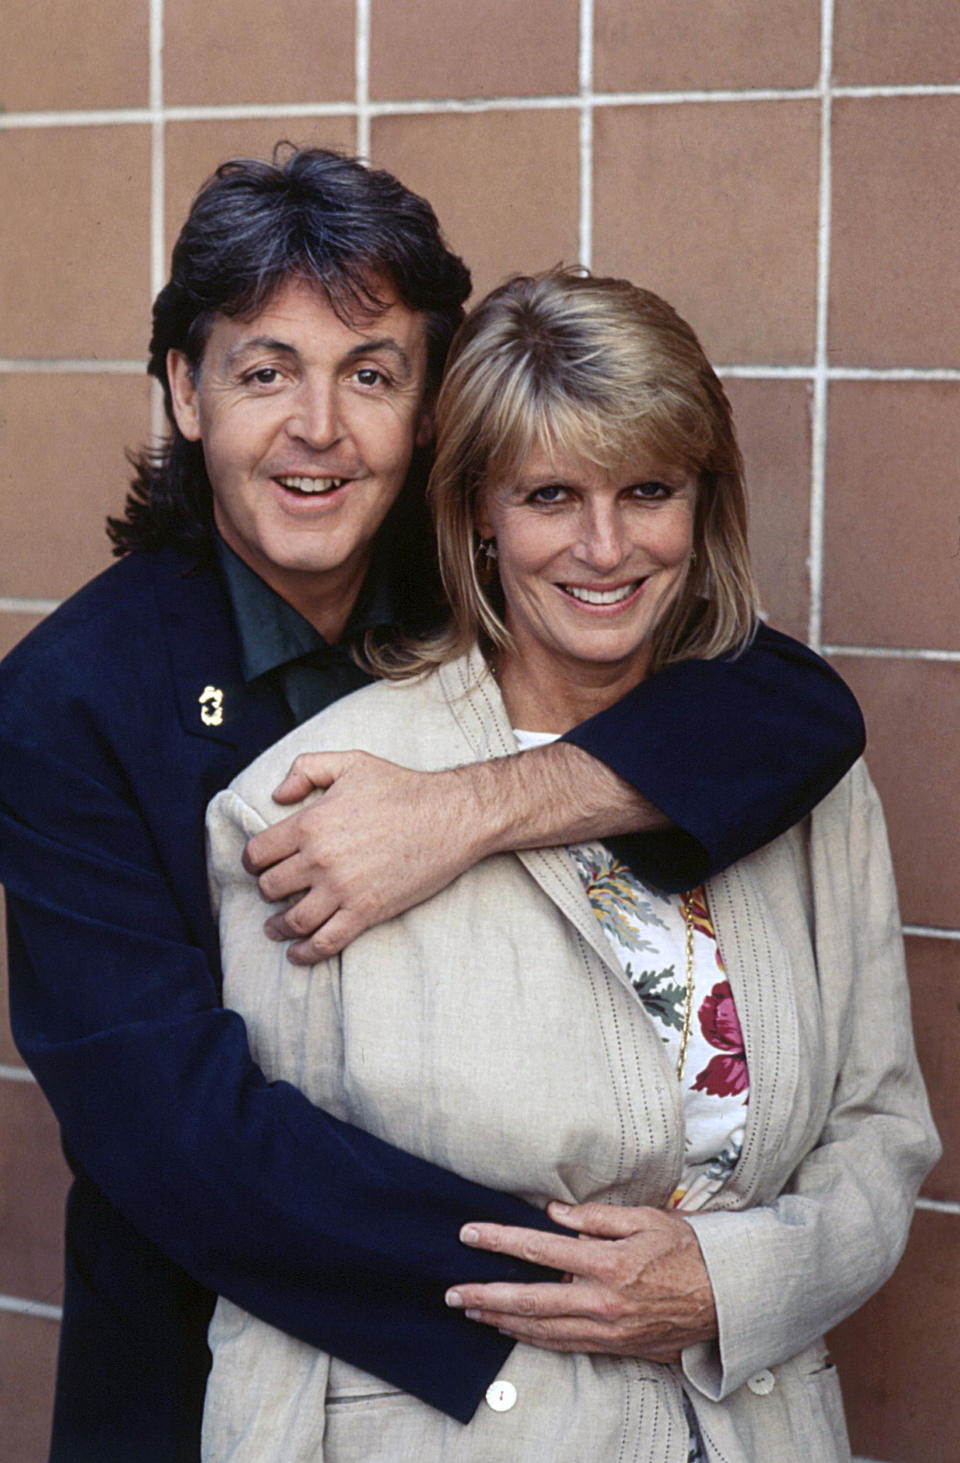 British singer-songwriter and musician Paul McCartney hugging his wife Linda Eastman. 1989 (Photo by Rino Petrosino/Mondadori Portfolio via Getty Images)